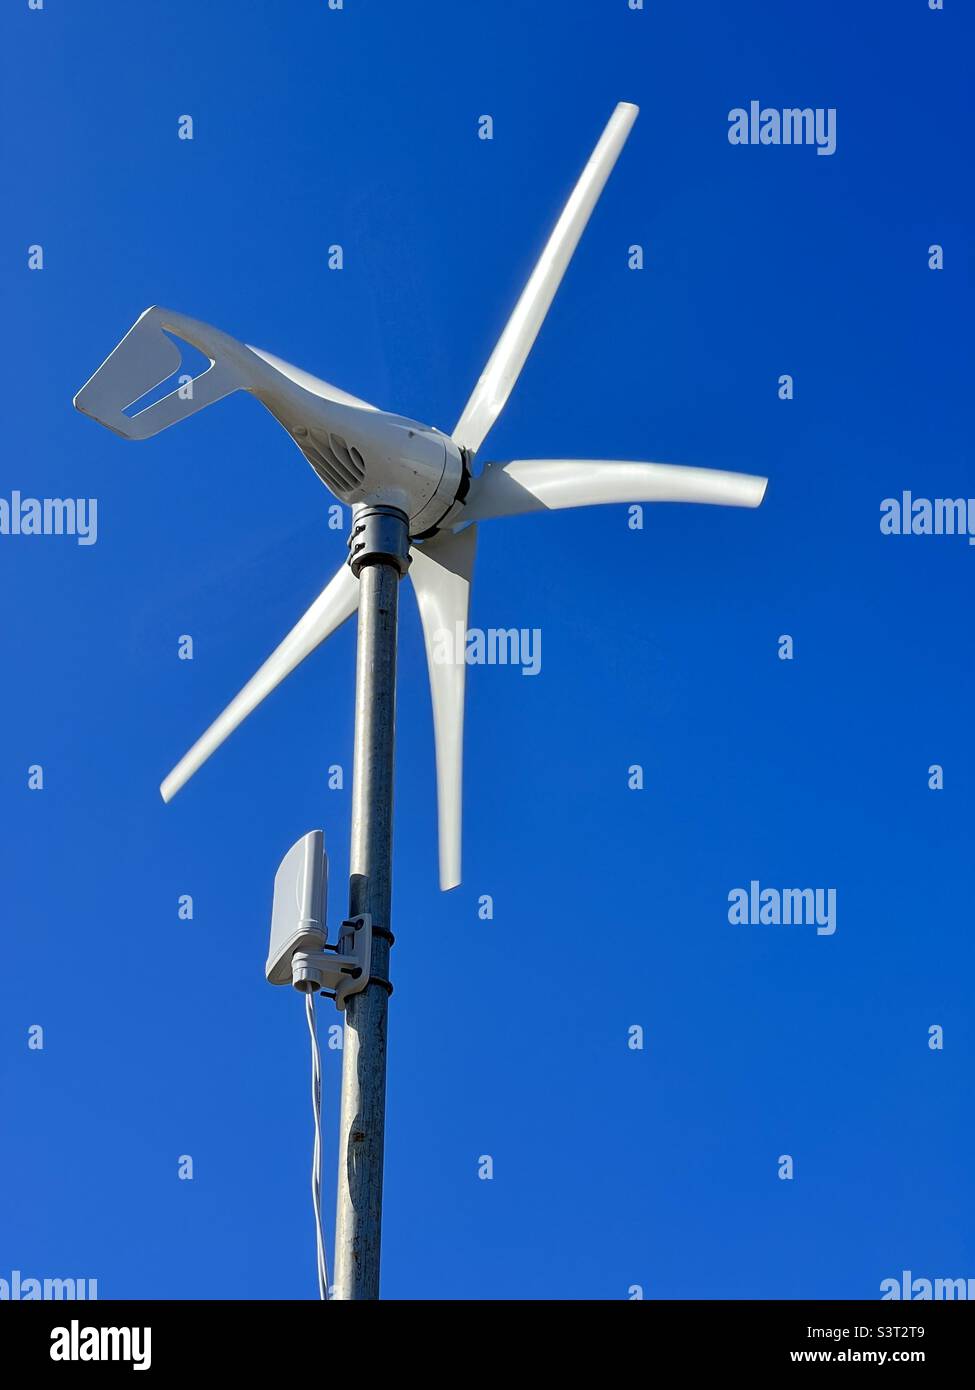 Small wind turbine against a clear, blue sky Stock Photo